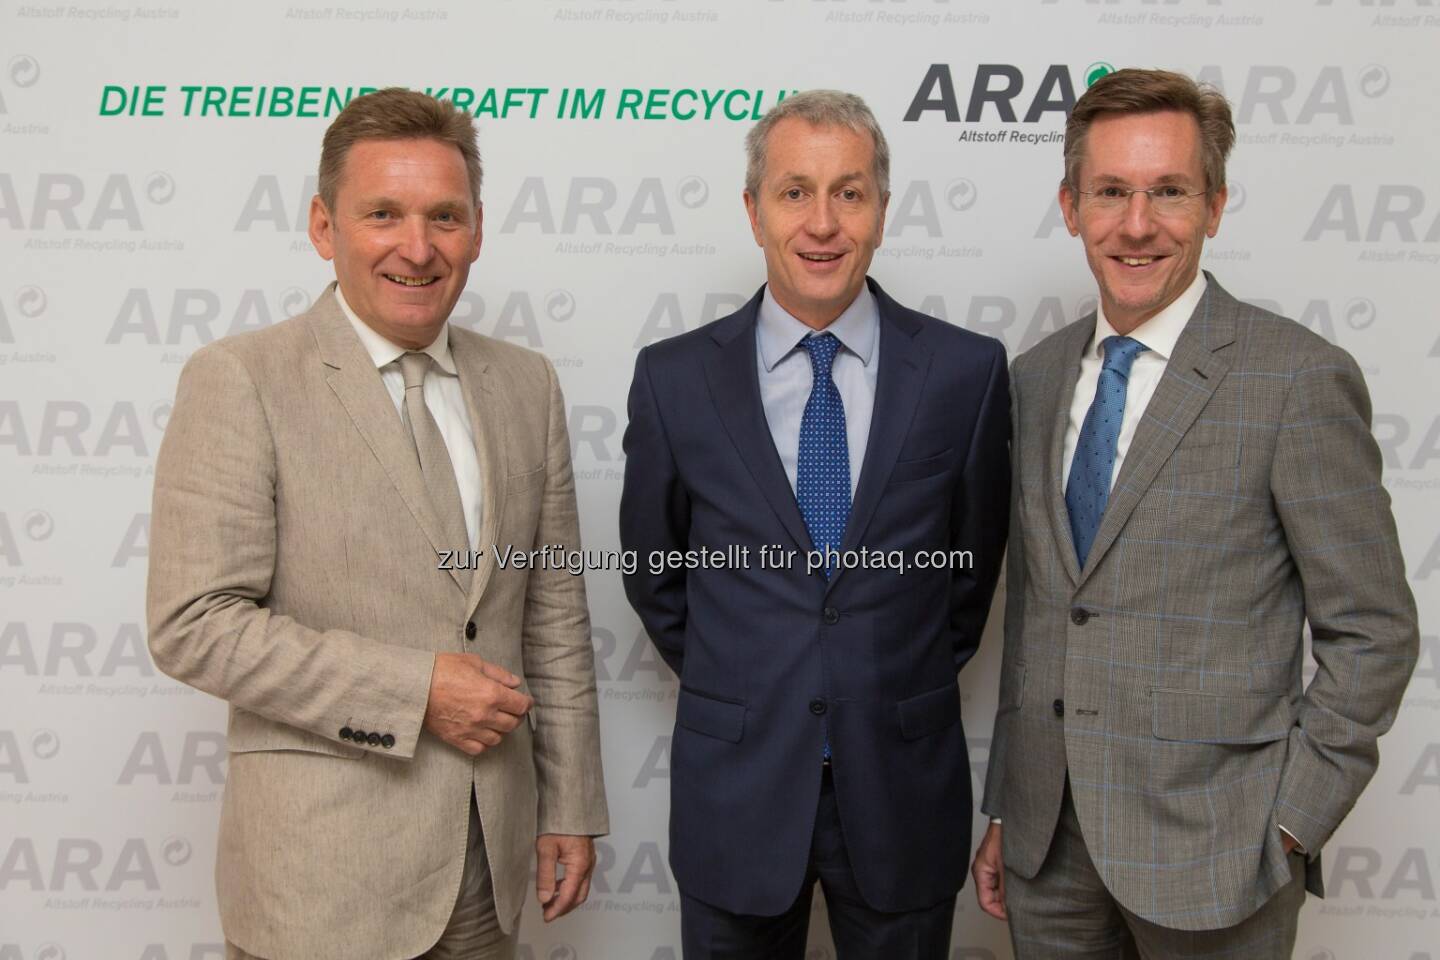 Werner Knausz (ARA Vorstand), Alfred Berger (Aufsichtsratsvorsitzender der ARA), Christoph Scharff (ARA Vorstand) : ARA: Sammelmengen bleiben konstant : Fotocredit: Altstoff Recycling Austria AG/APA-Fotoservice/Tanzer